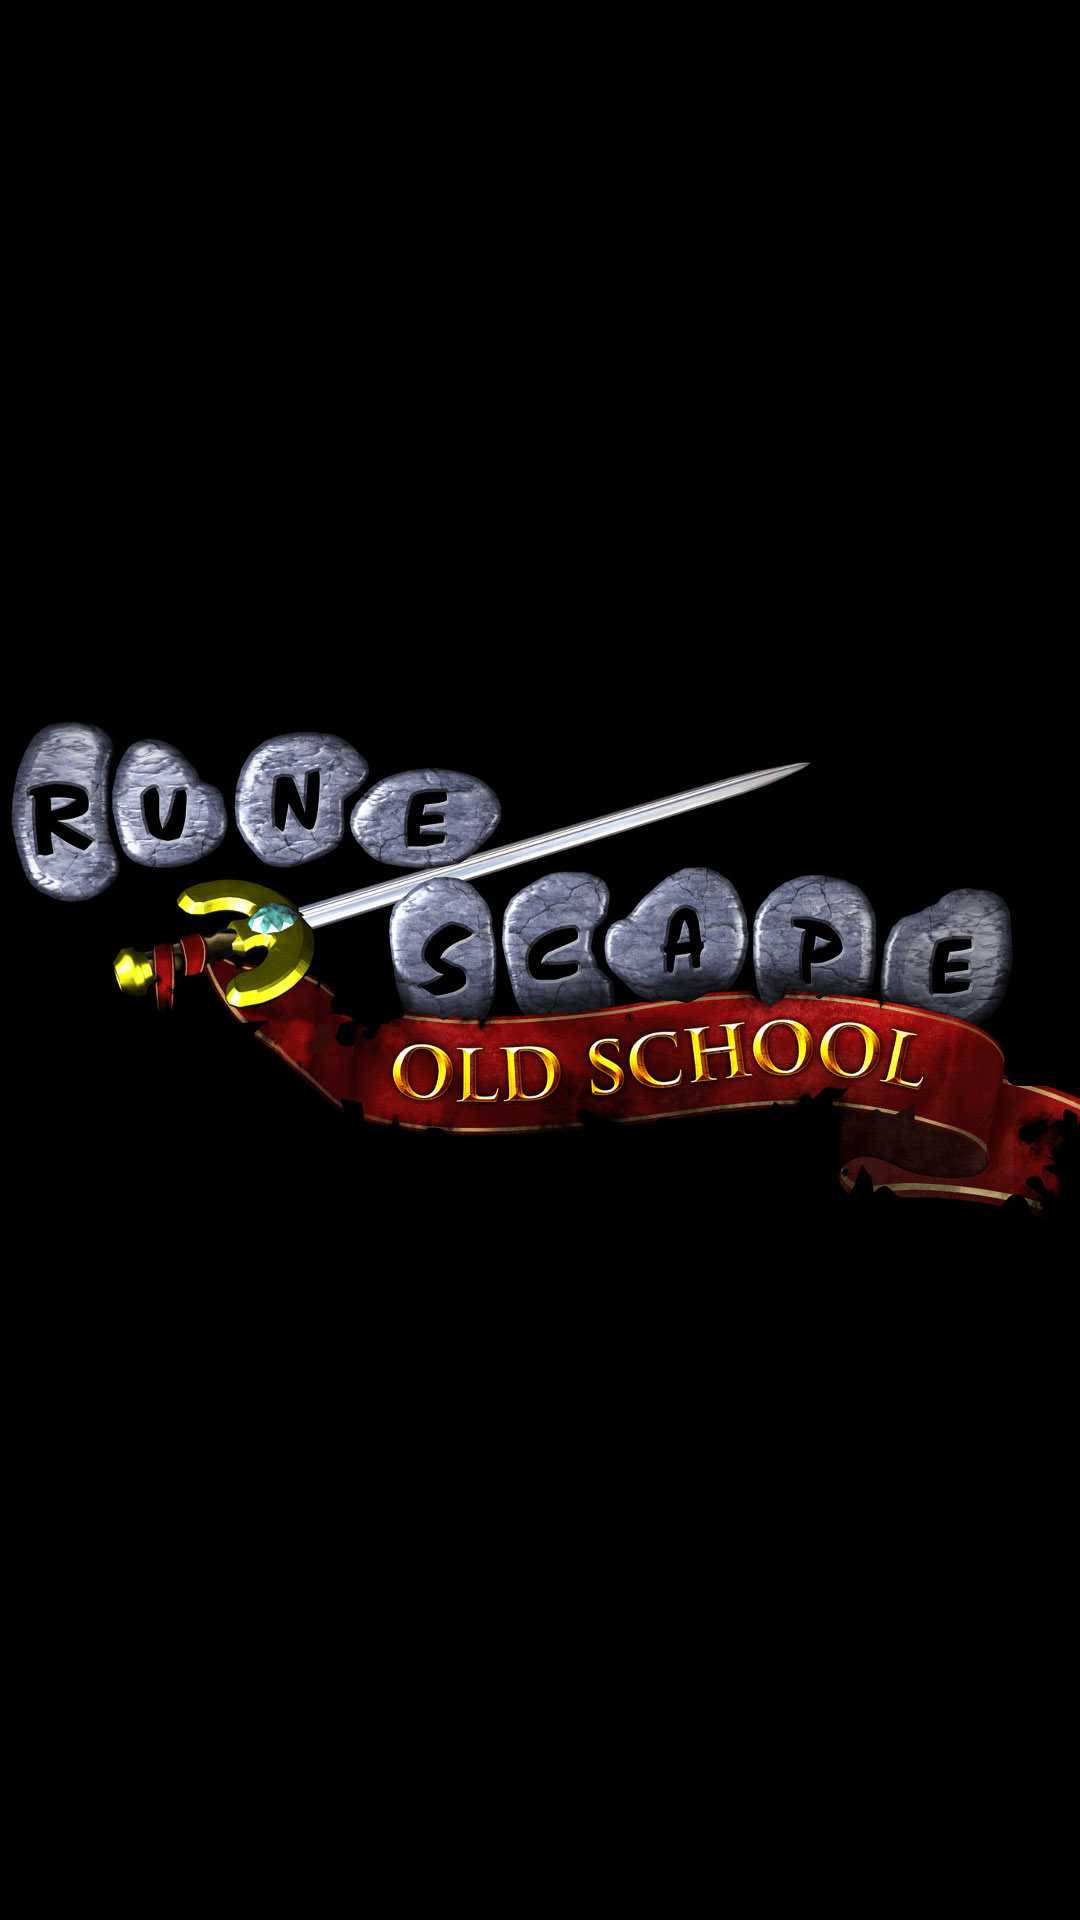 Old School Runescape - Vintage Video Game Logo Background